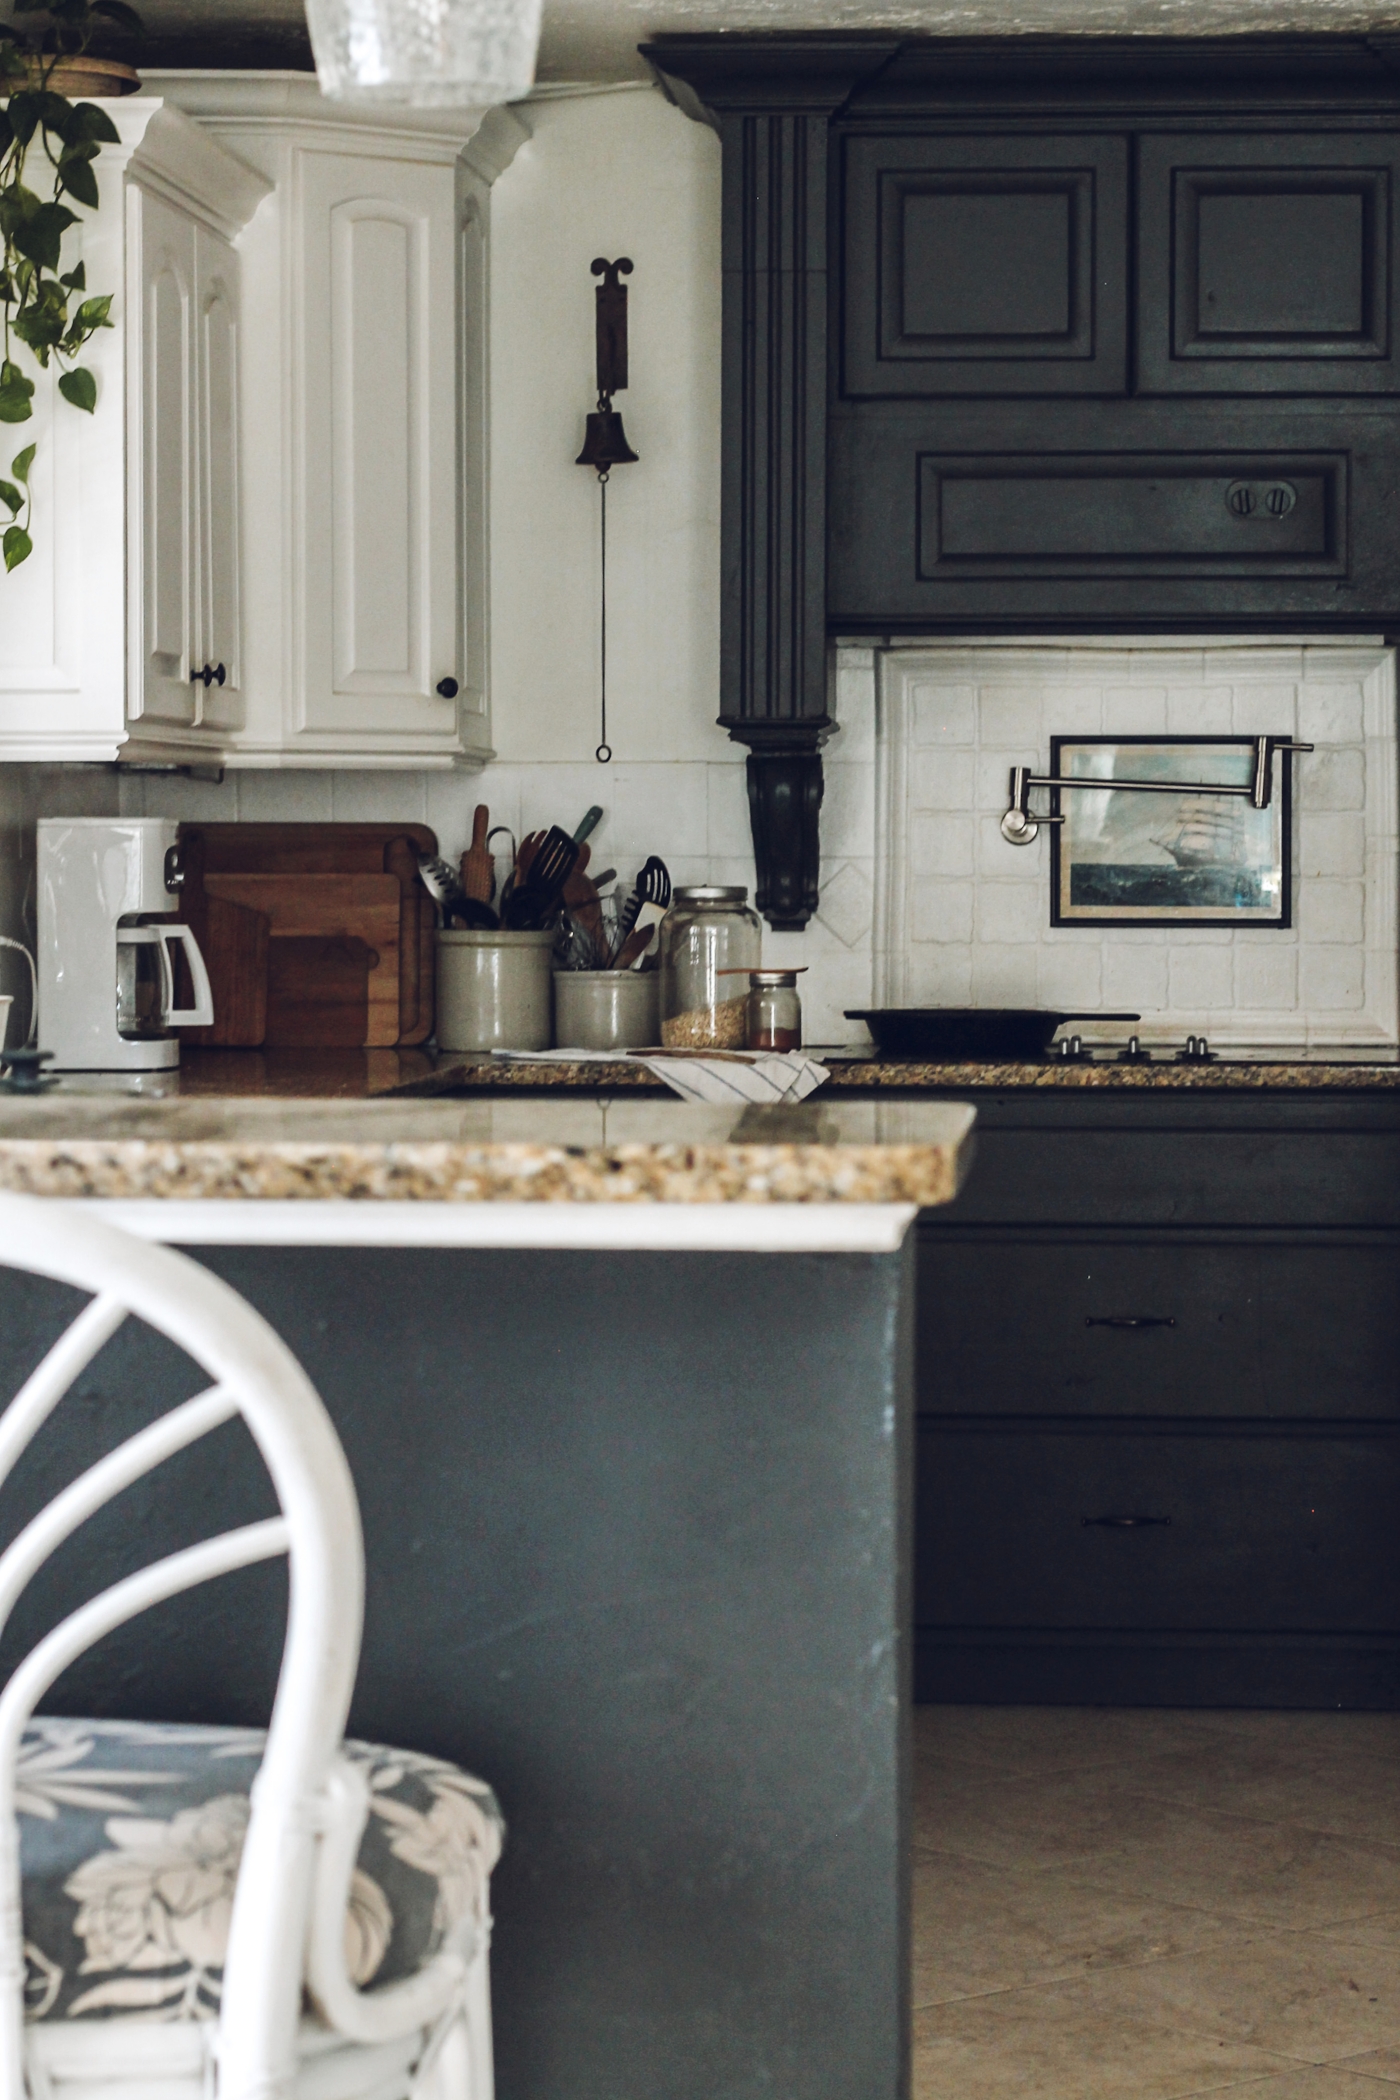 Kitchen Update: Why I still love the dark Cabinets - The Wicker House